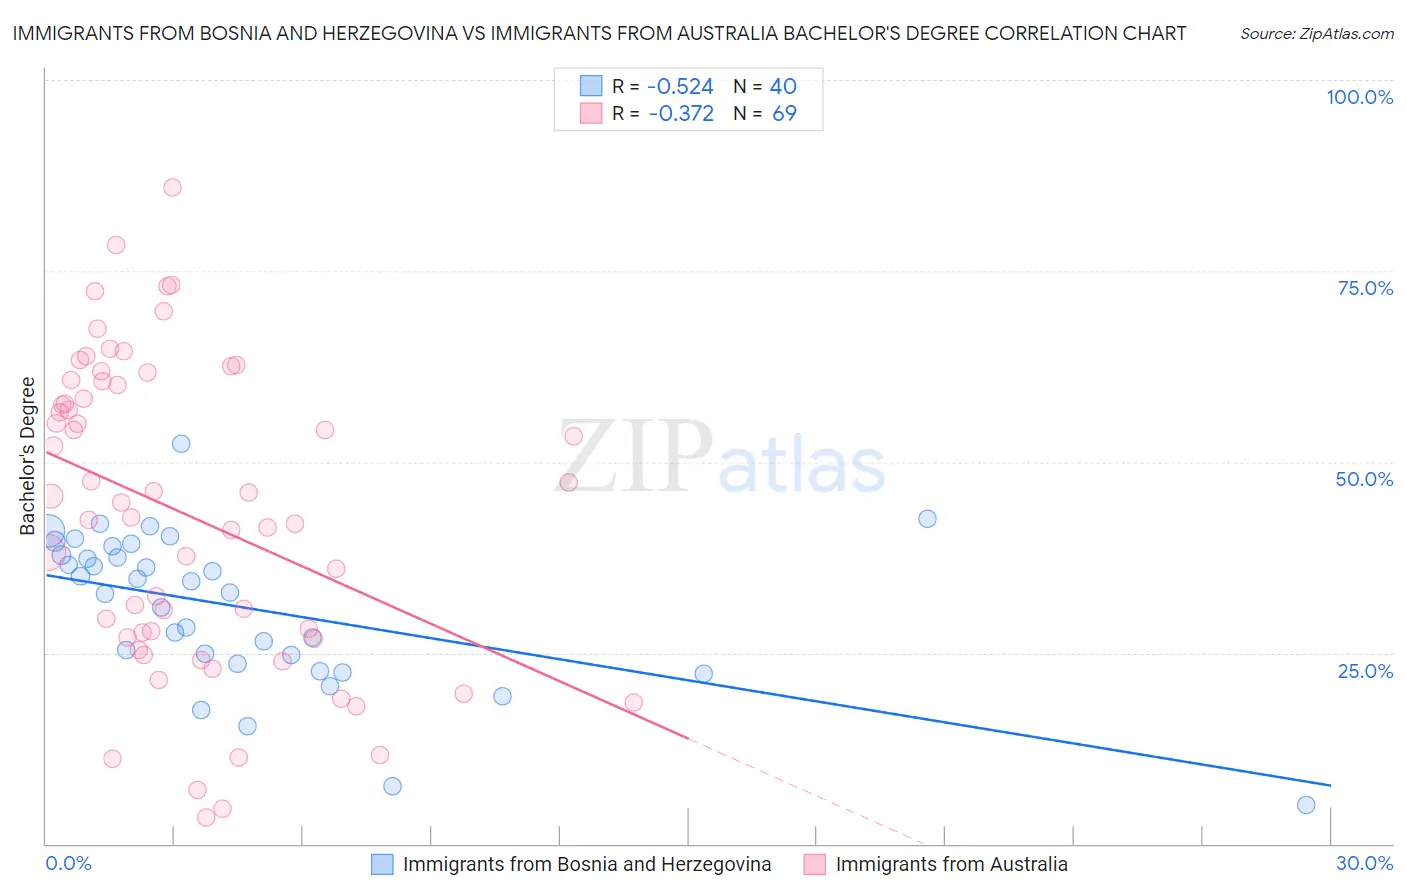 Immigrants from Bosnia and Herzegovina vs Immigrants from Australia Bachelor's Degree